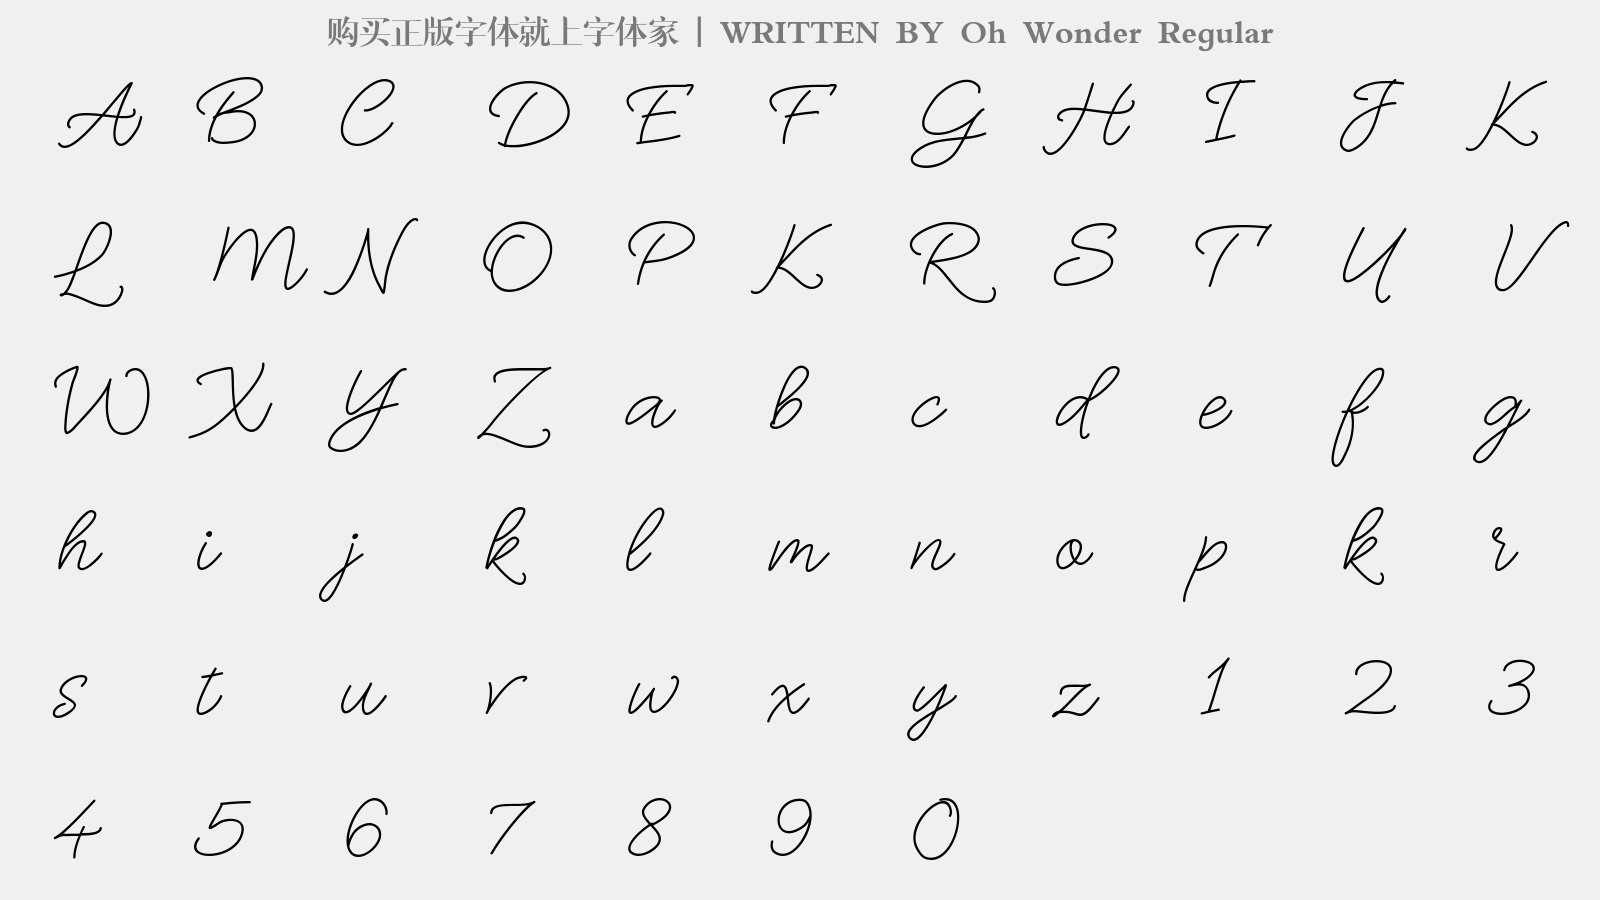 Oh Wonder Regular - 大写字母/小写字母/数字